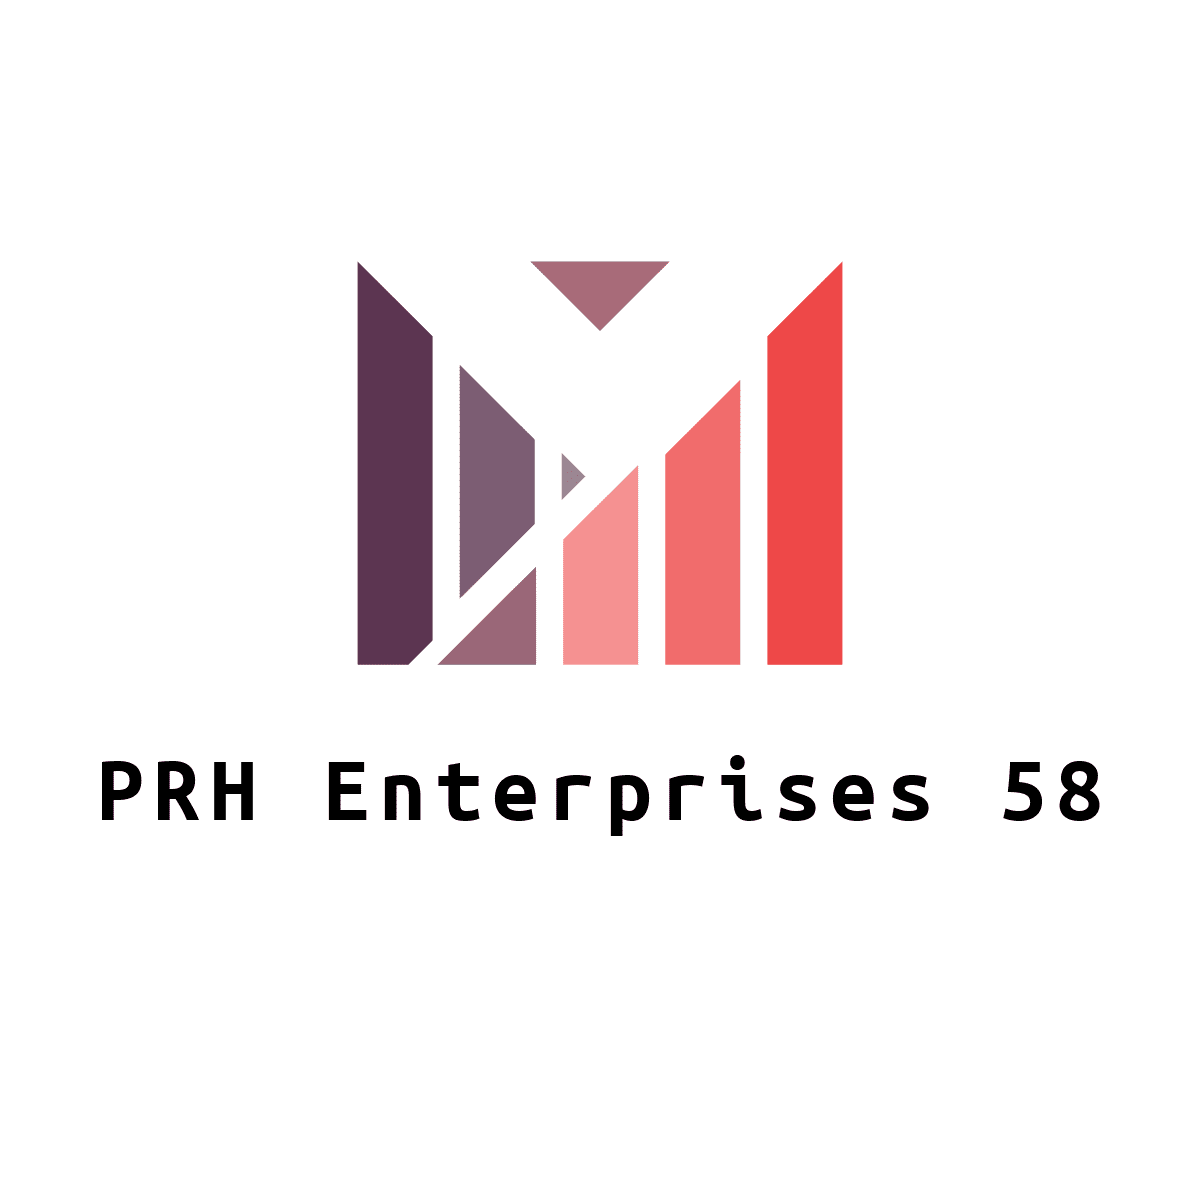 PRH Enterprises 58